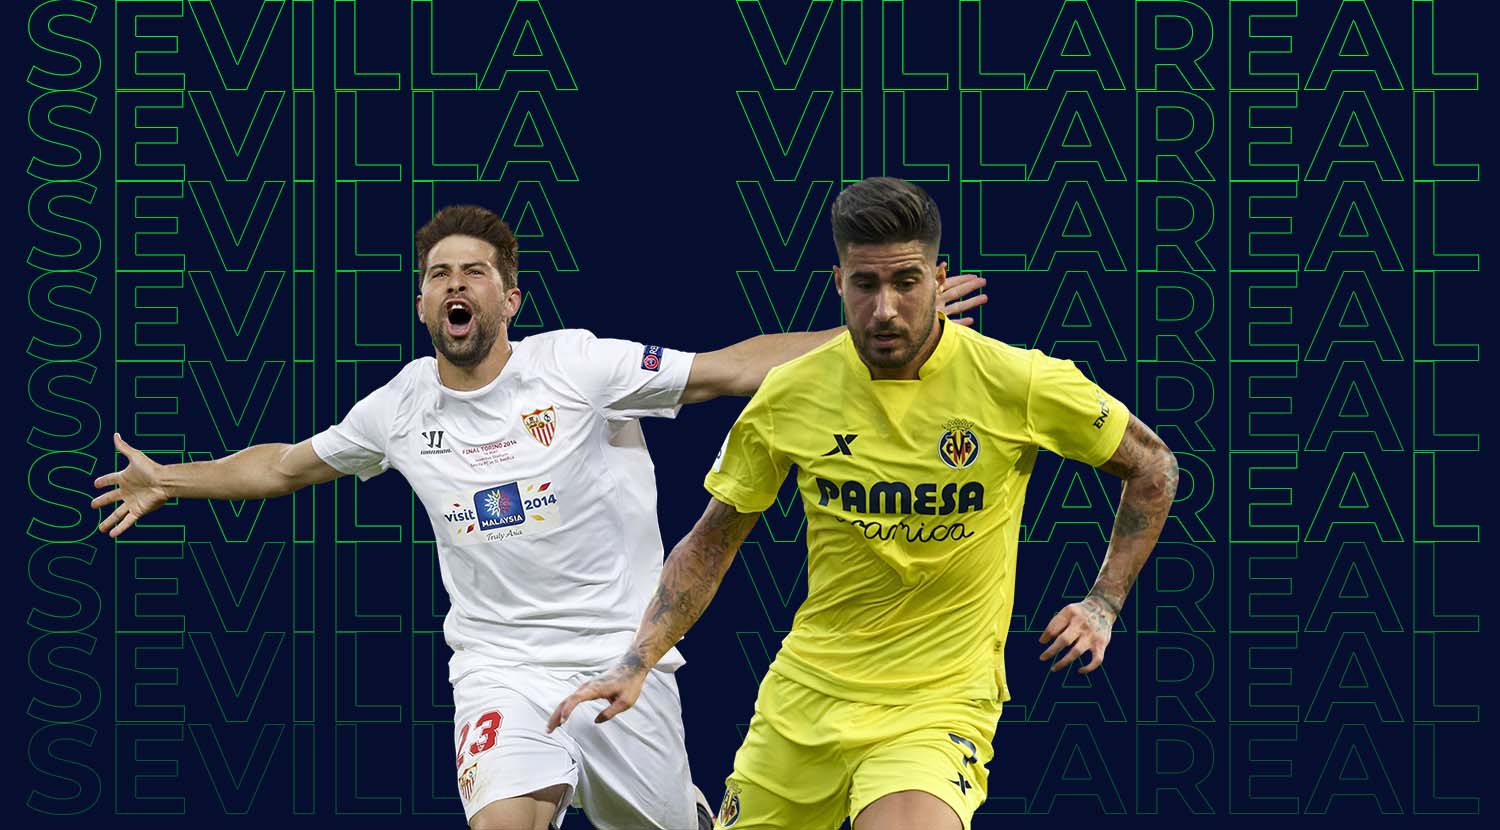 Interesting match between two powerful Spanish teams: Sevilla vs Villareal.